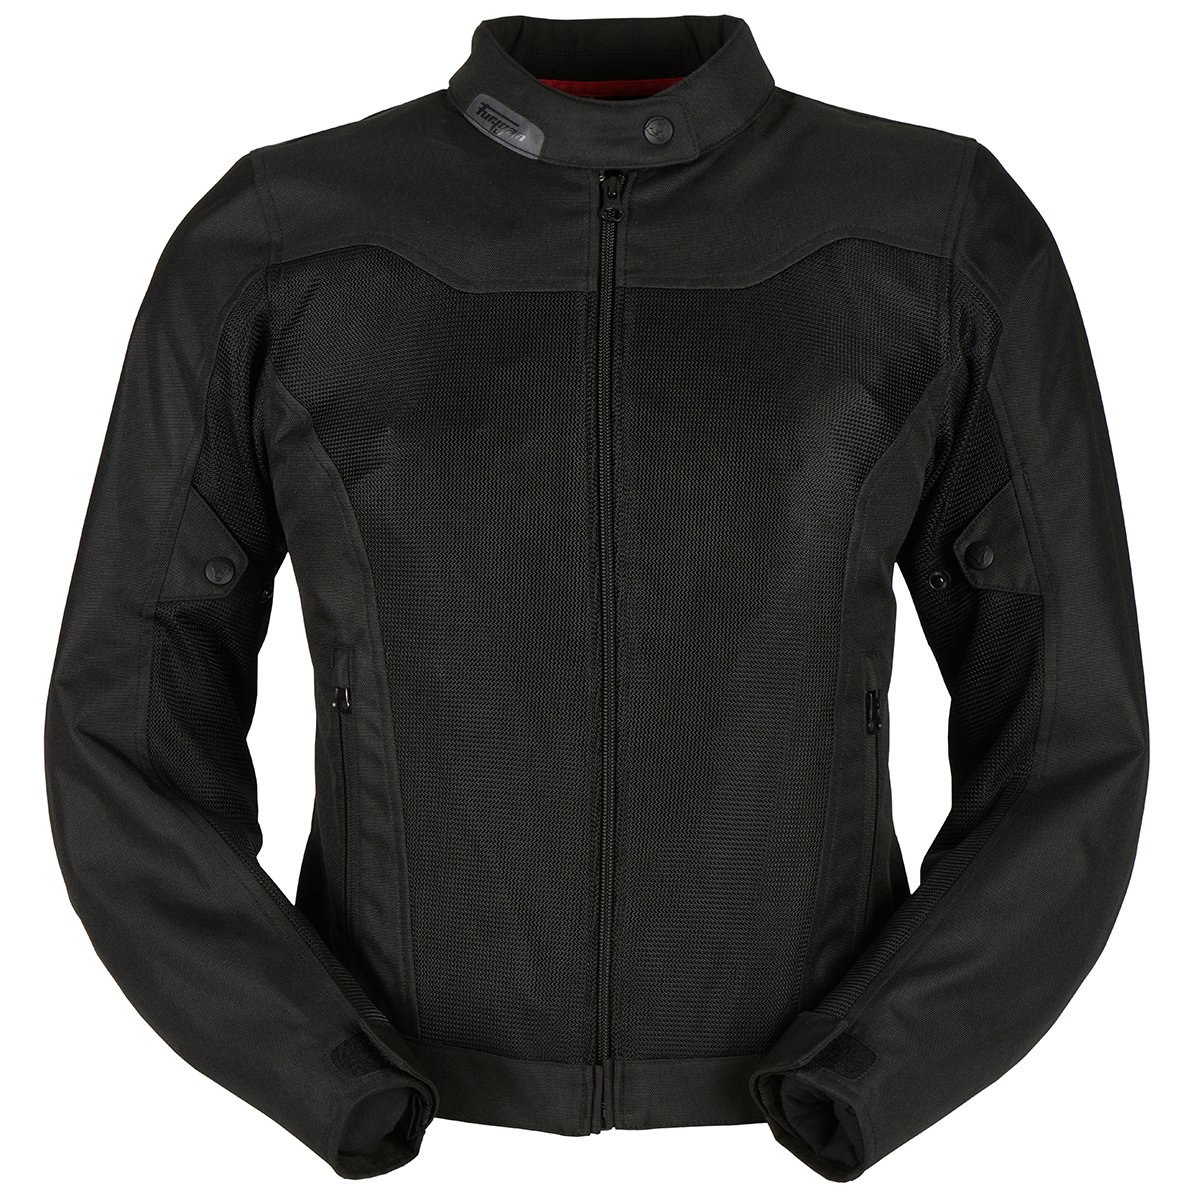 Image of Furygan Mistral Evo 3 Jacket Lady Black Size L ID 3435980342364